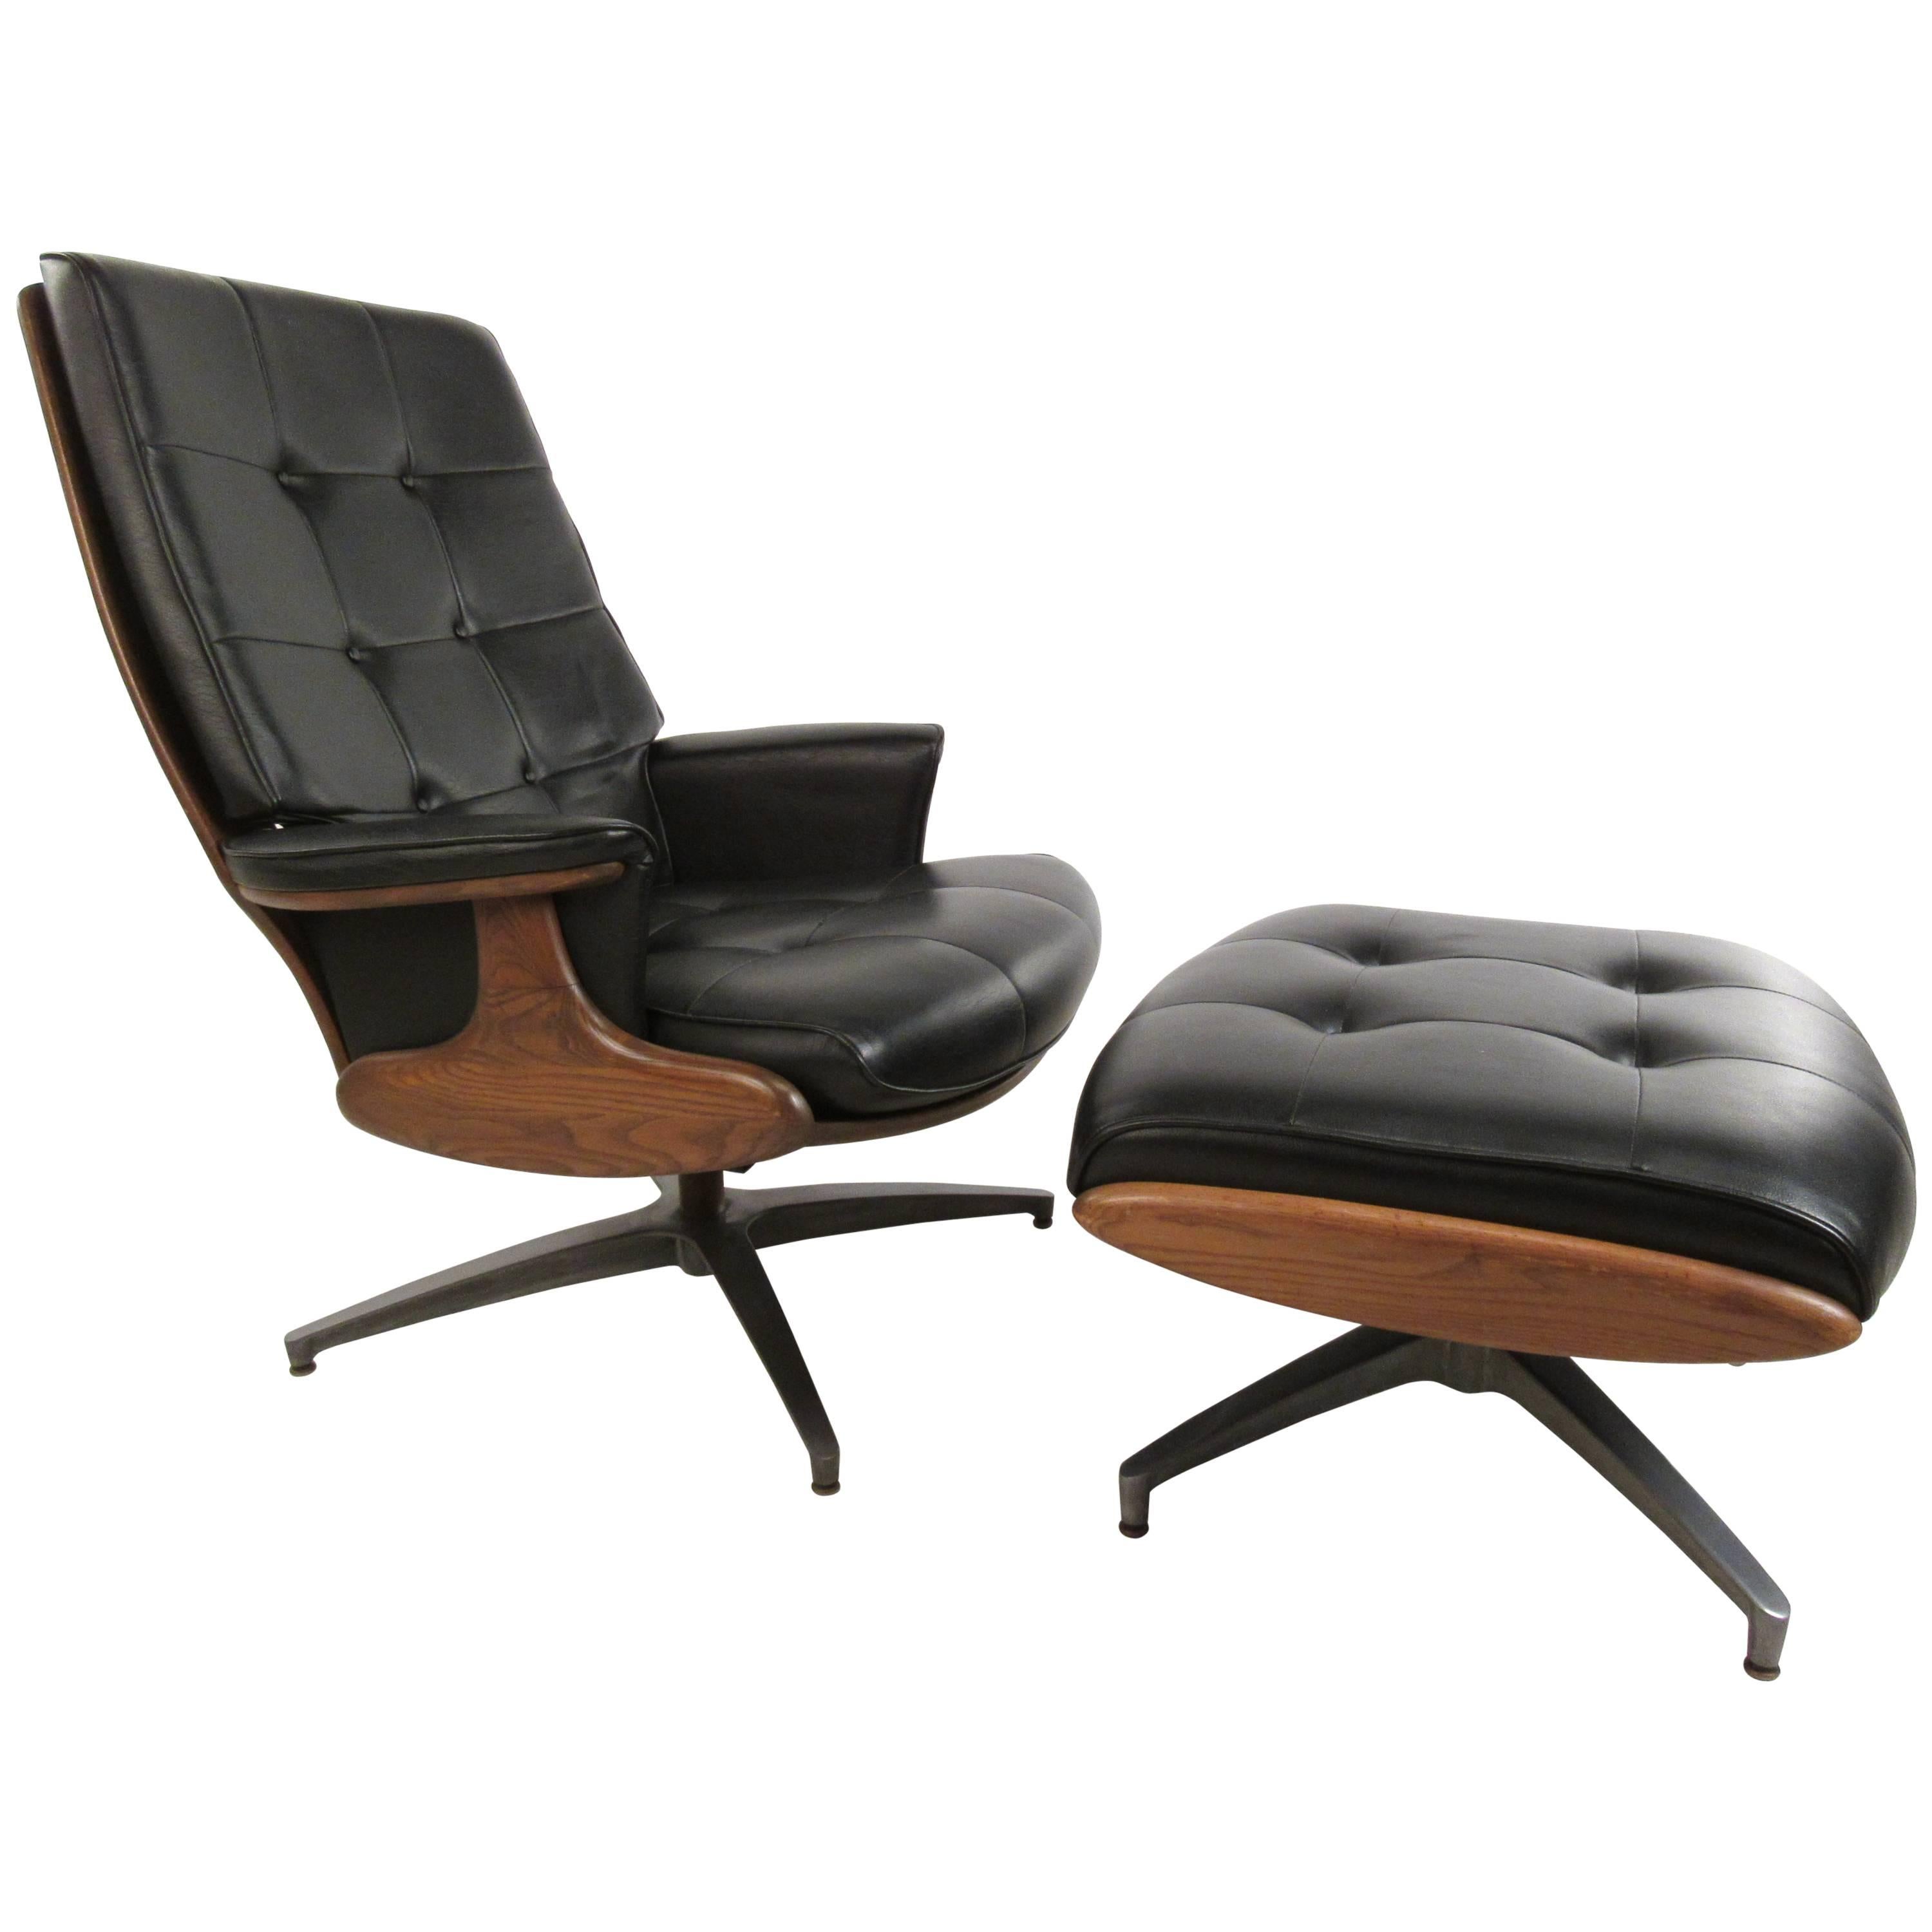 Heywood-Wakefield Swivel Lounge Chair with Ottoman